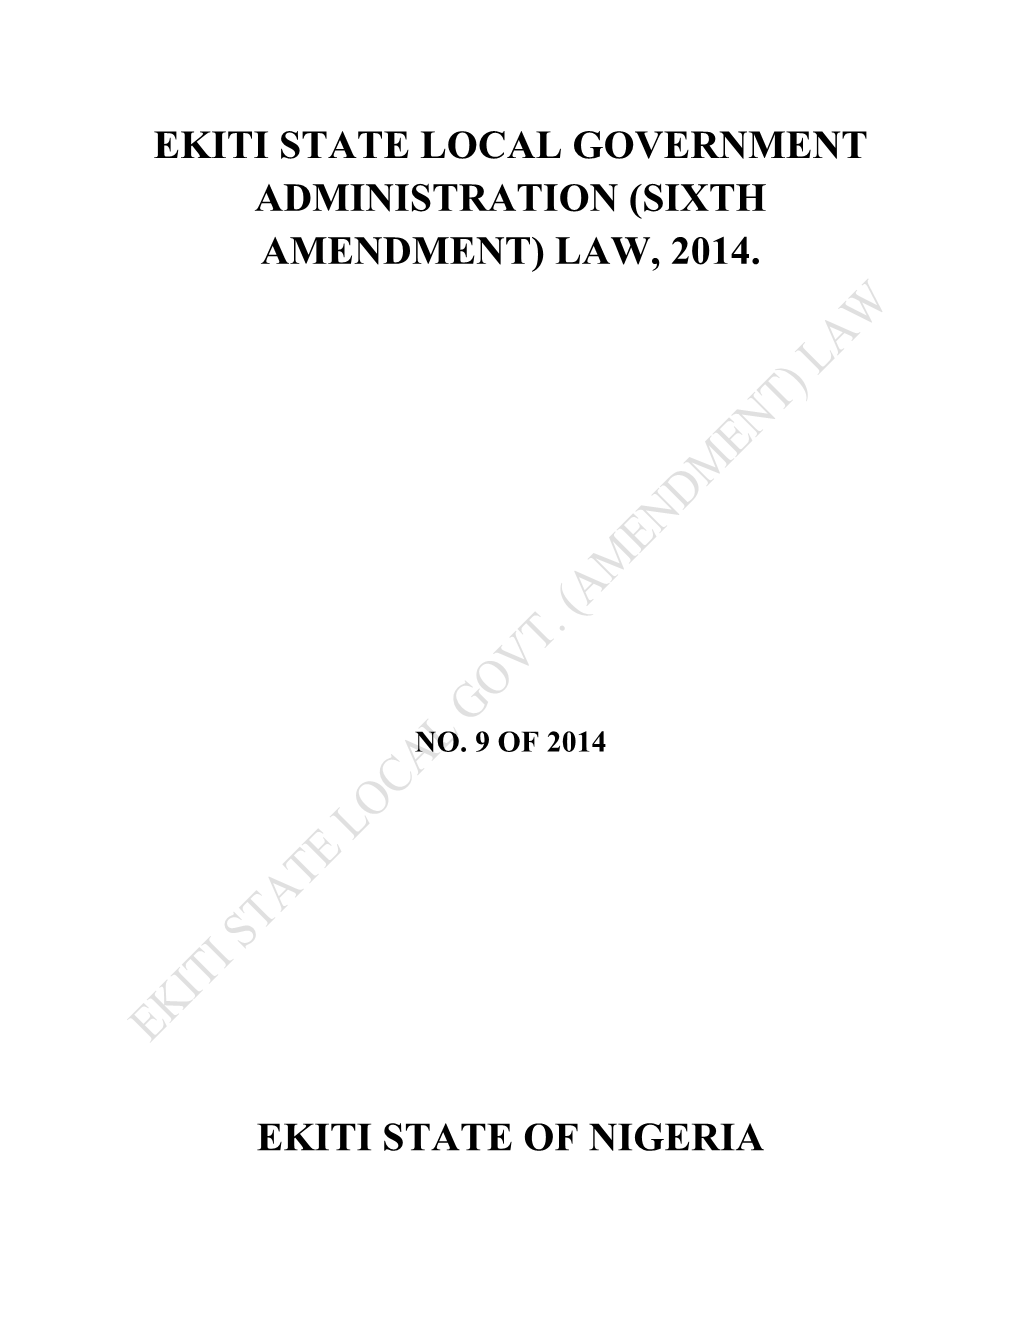 Ekiti State Local Government Administration (Sixth Amendment) Law, 2014